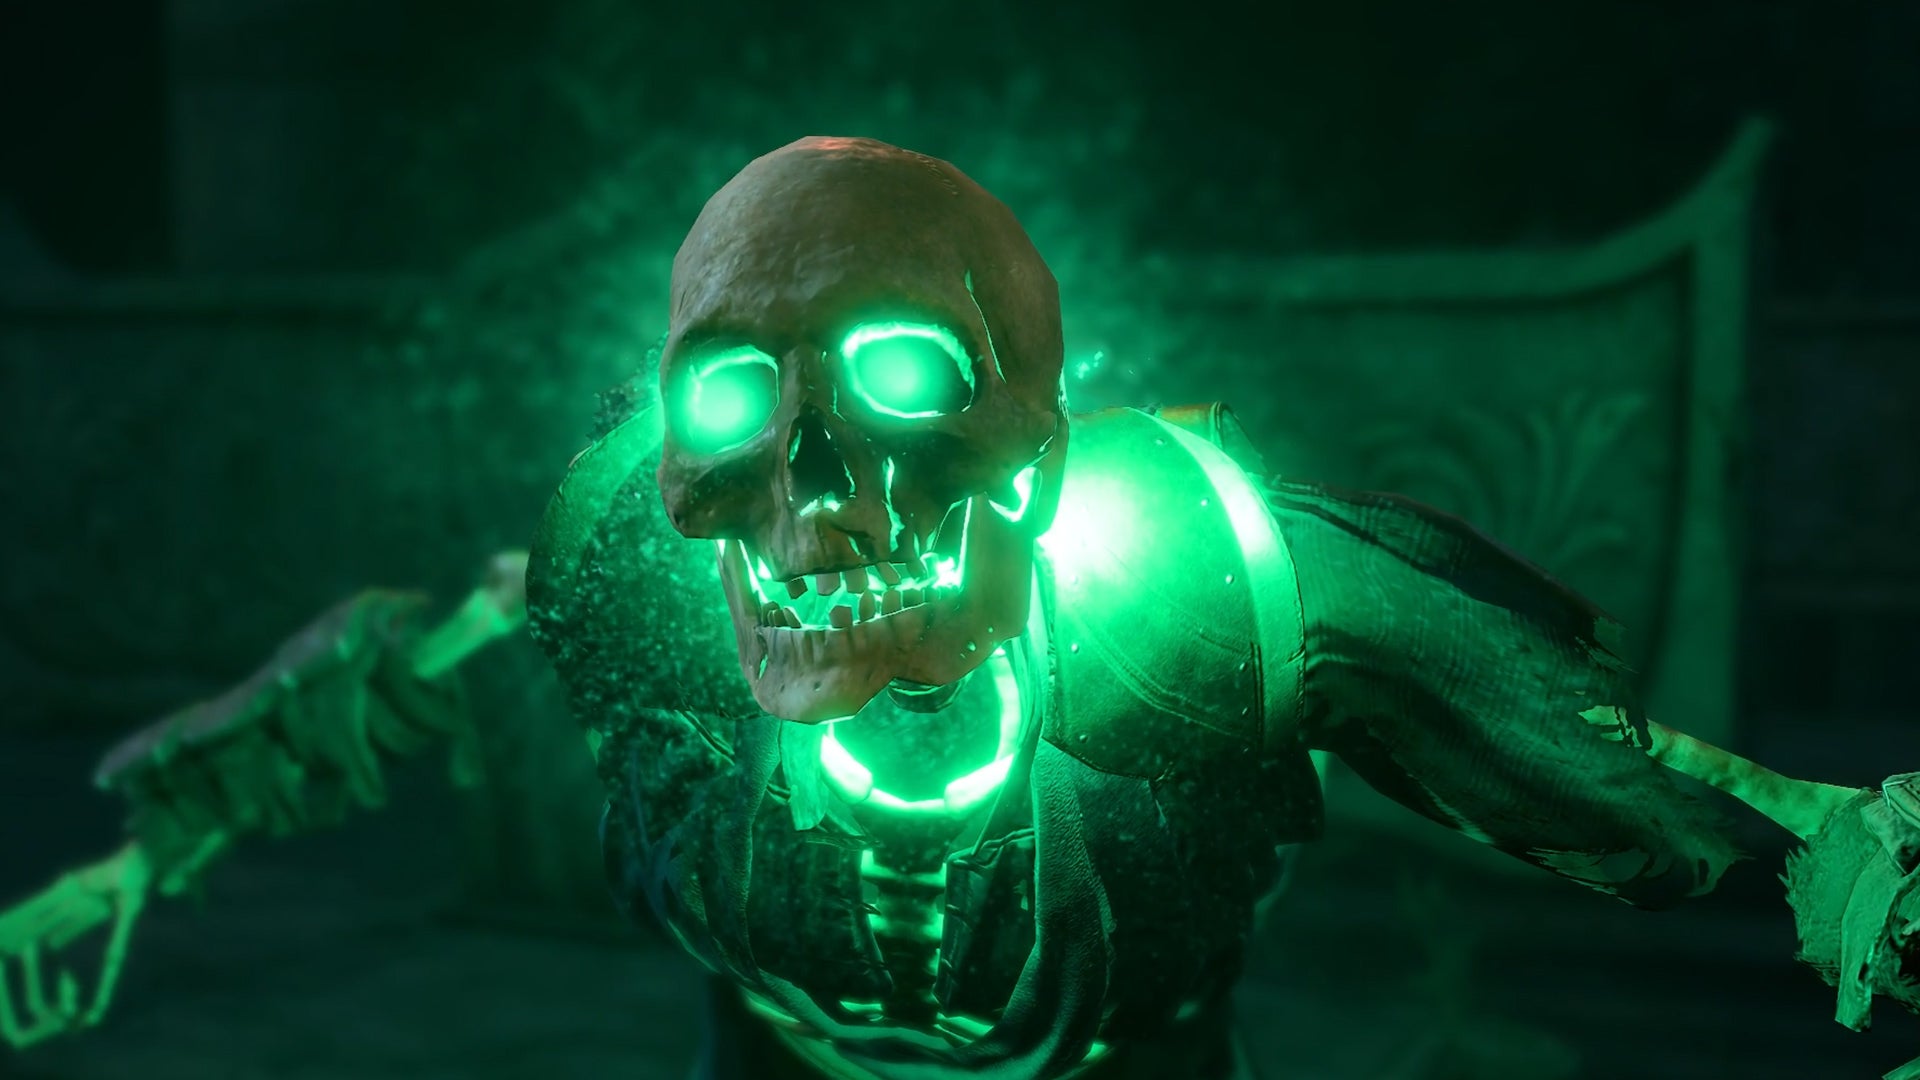 Skeleton glows green.